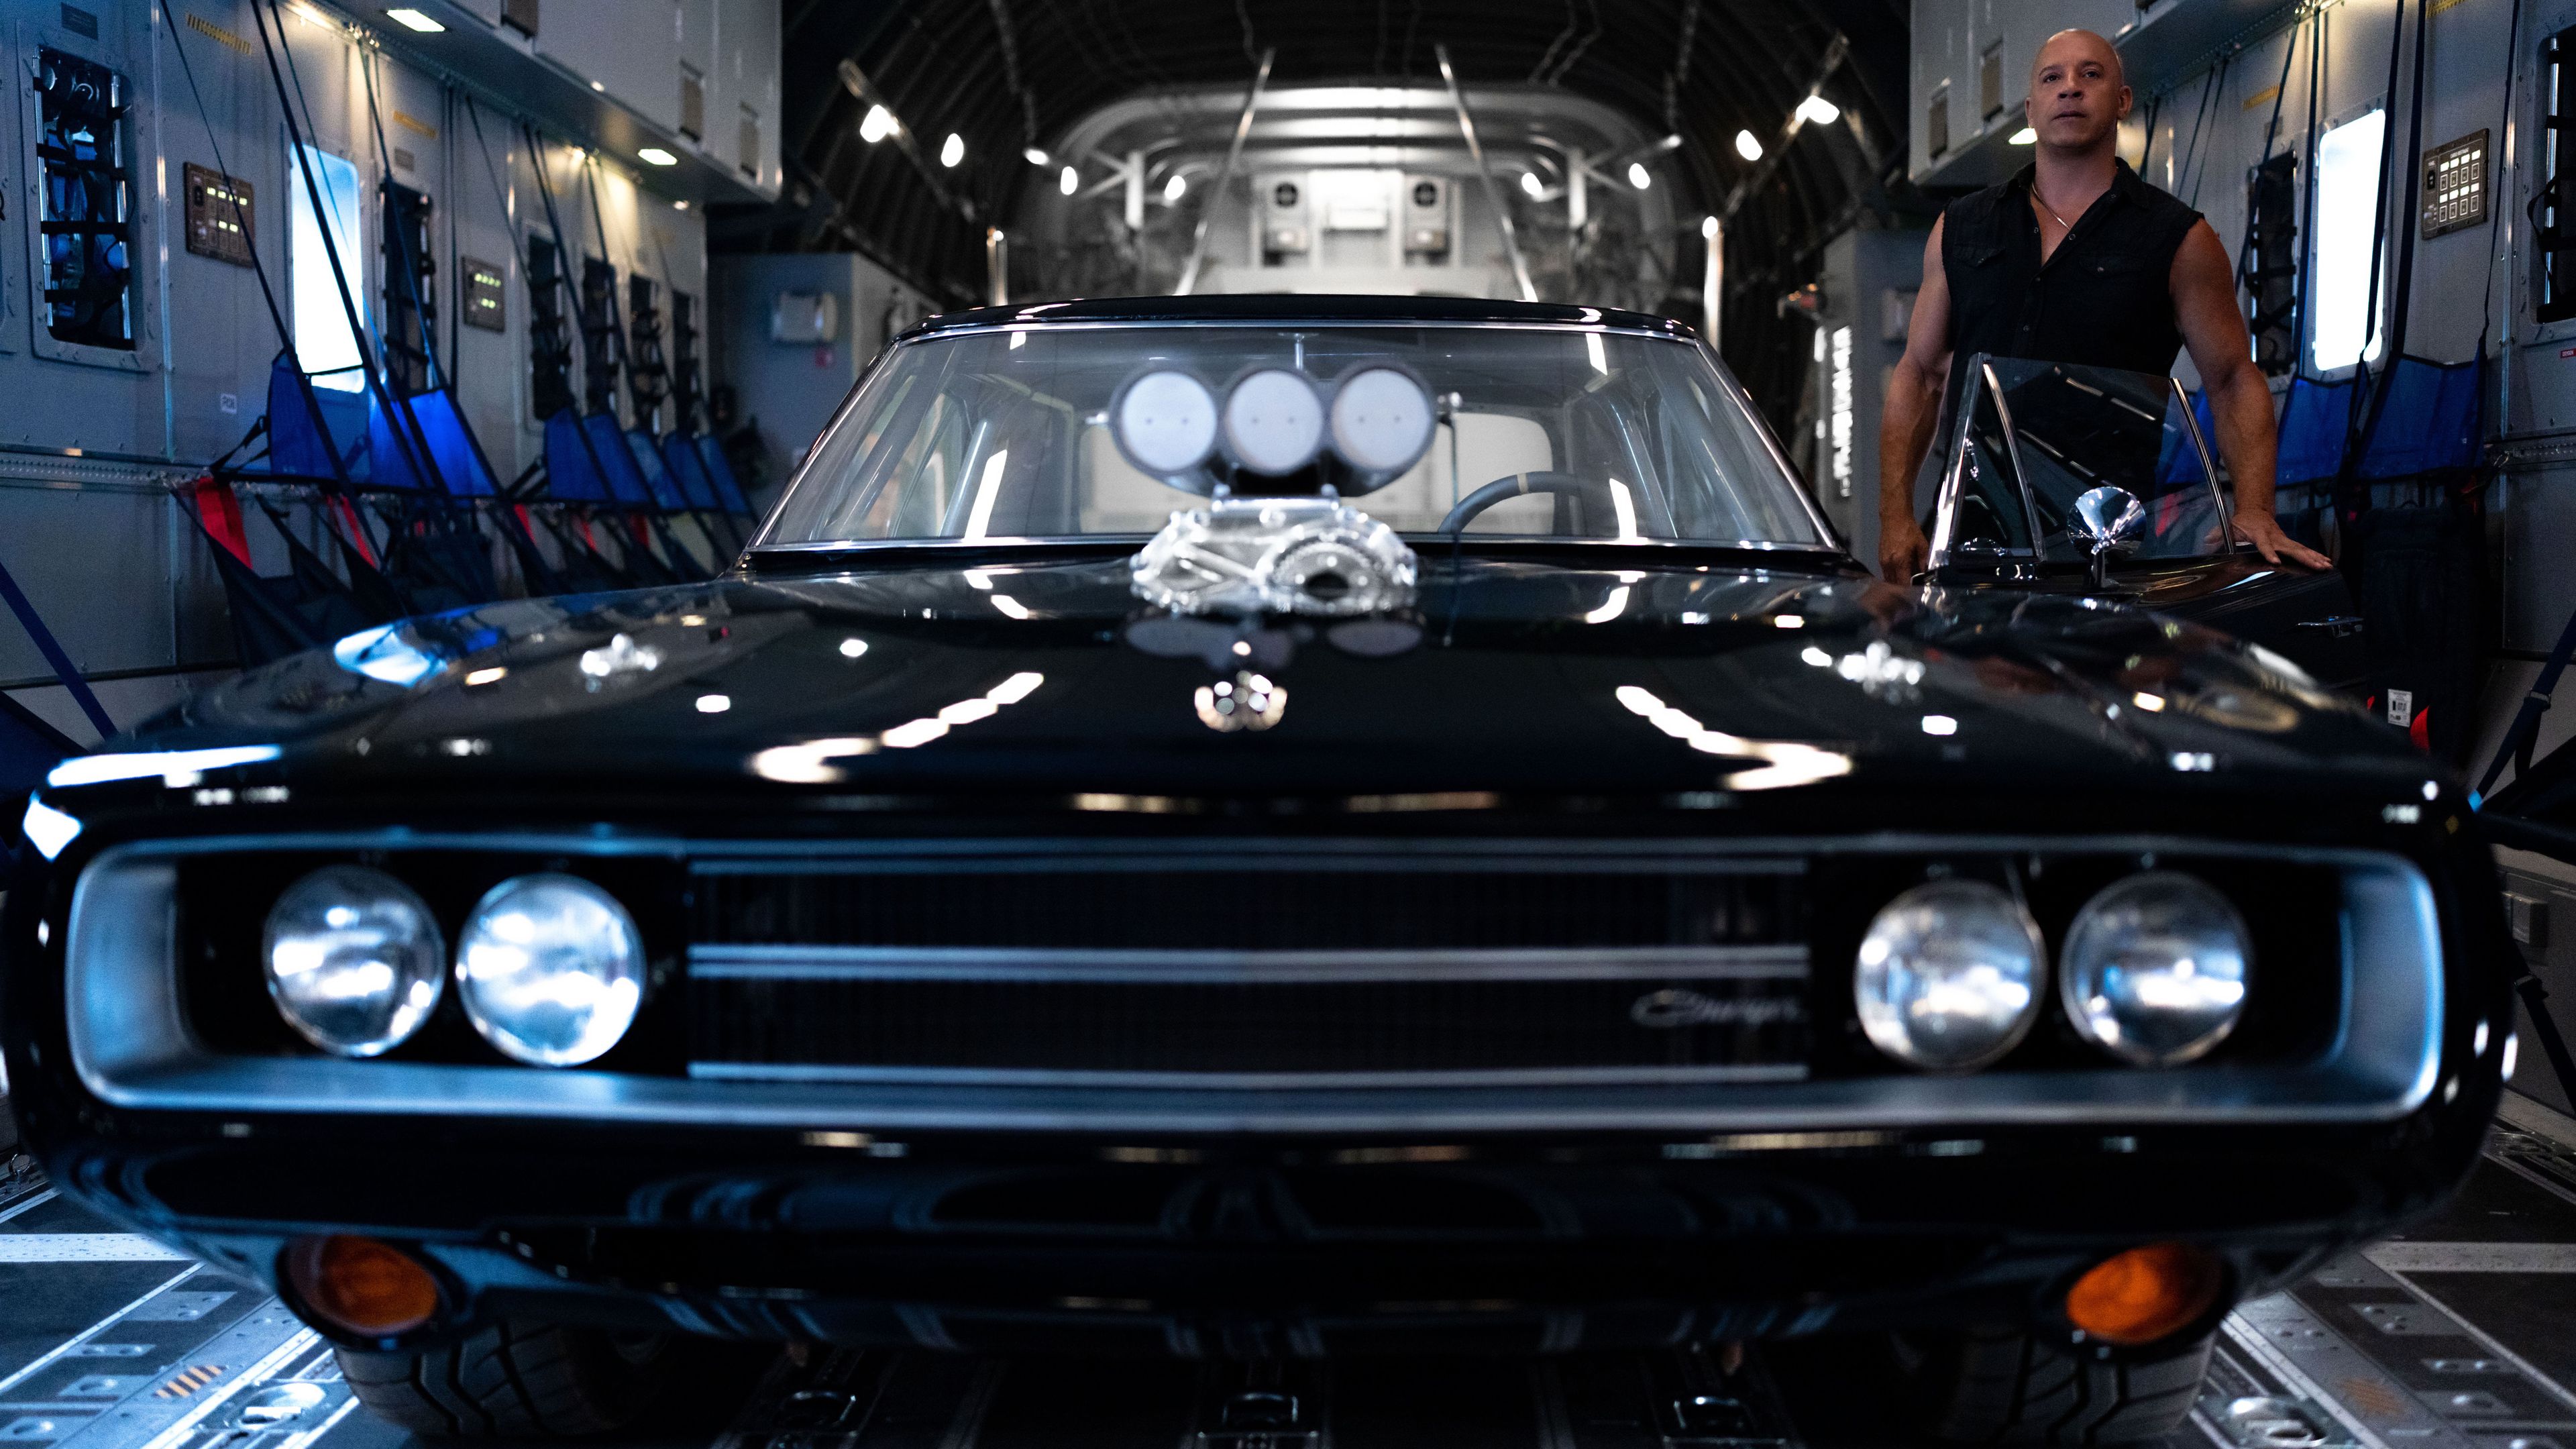 Dodge Charger de 1970, el coche predilecto de Dominic Toretto en la saga Fast & Furious